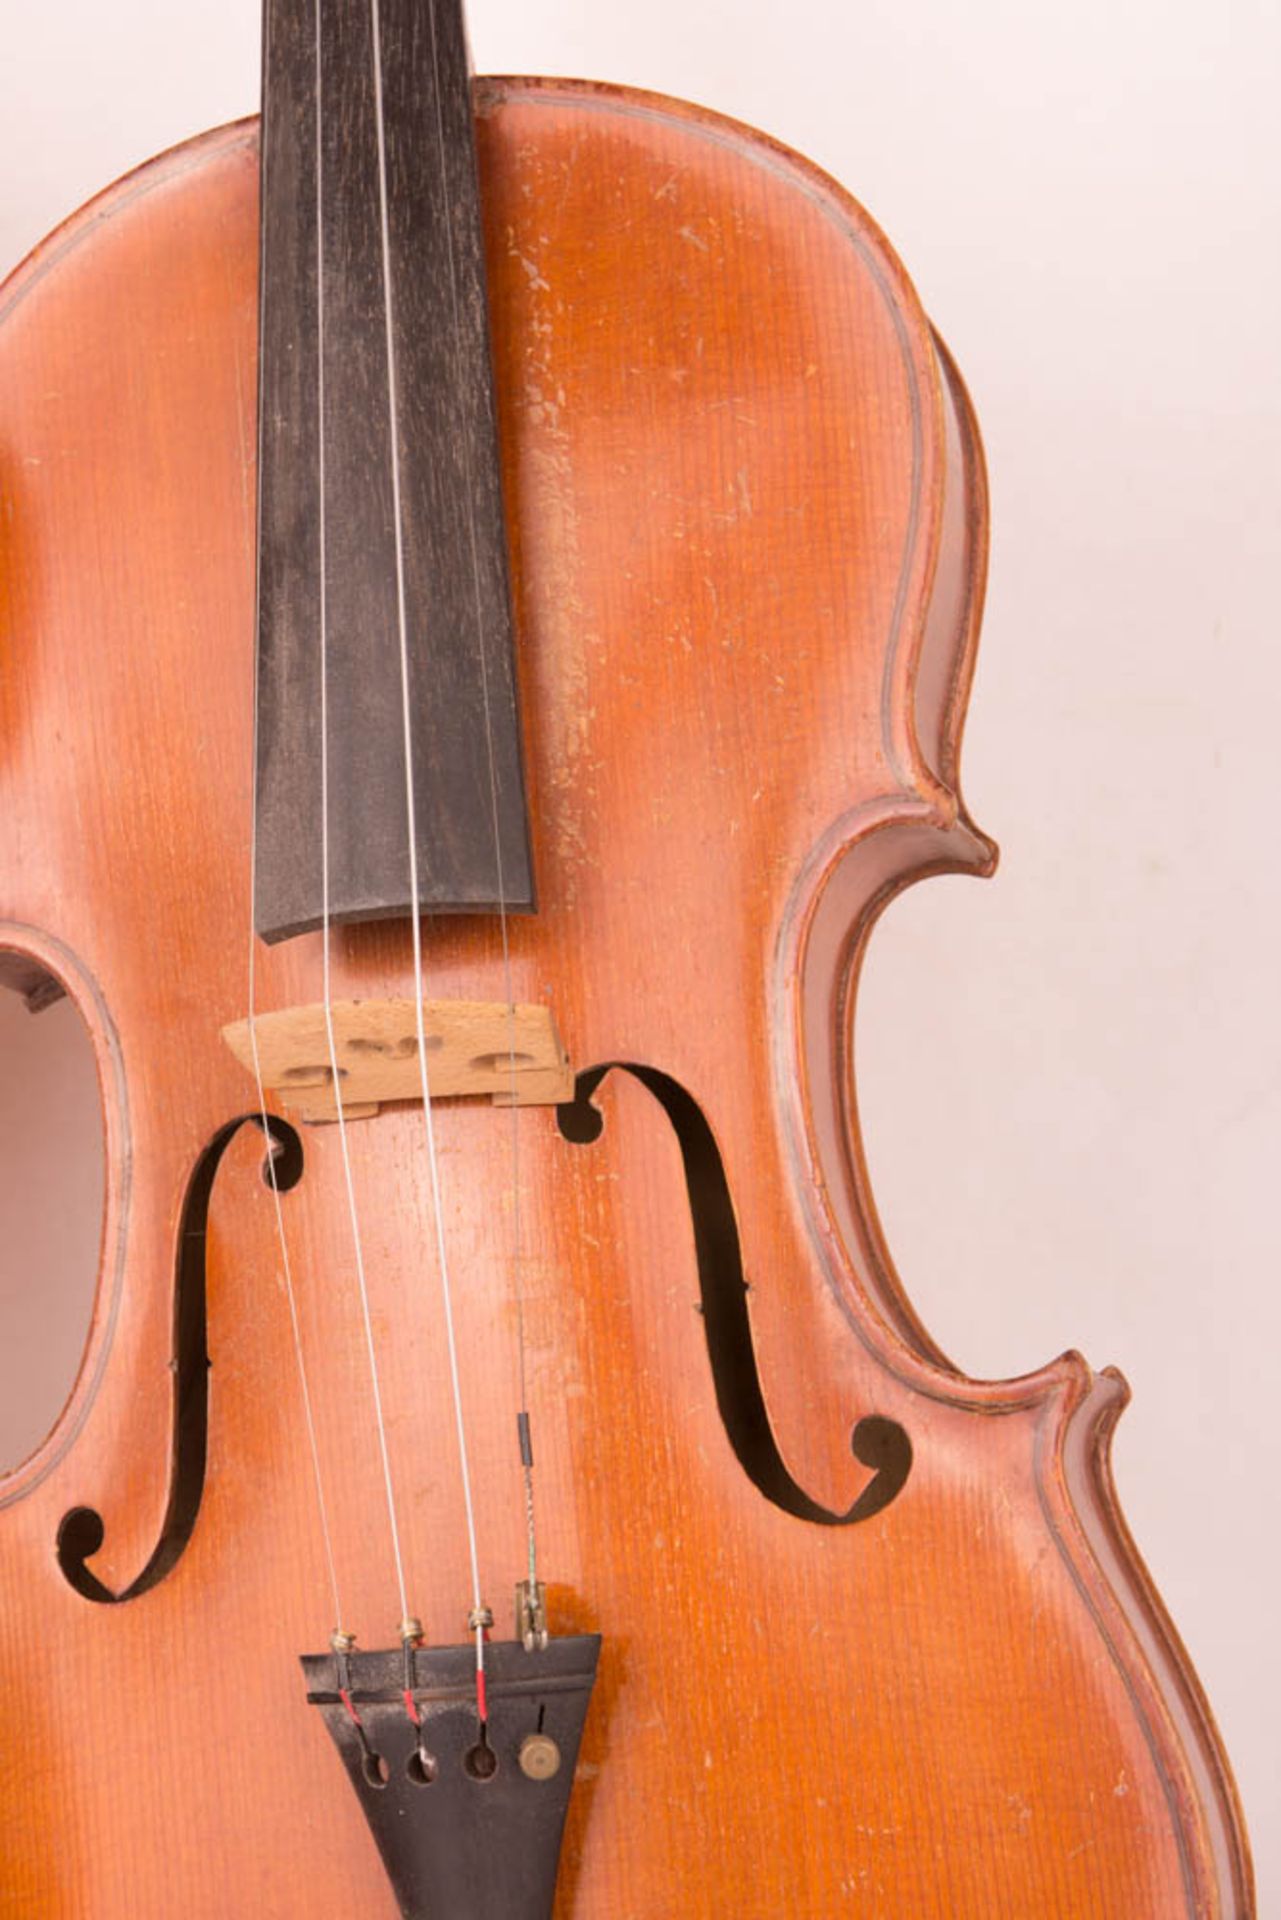 Two violins, Aubert Mirecourt, beginning of the 20th century. - Image 4 of 8